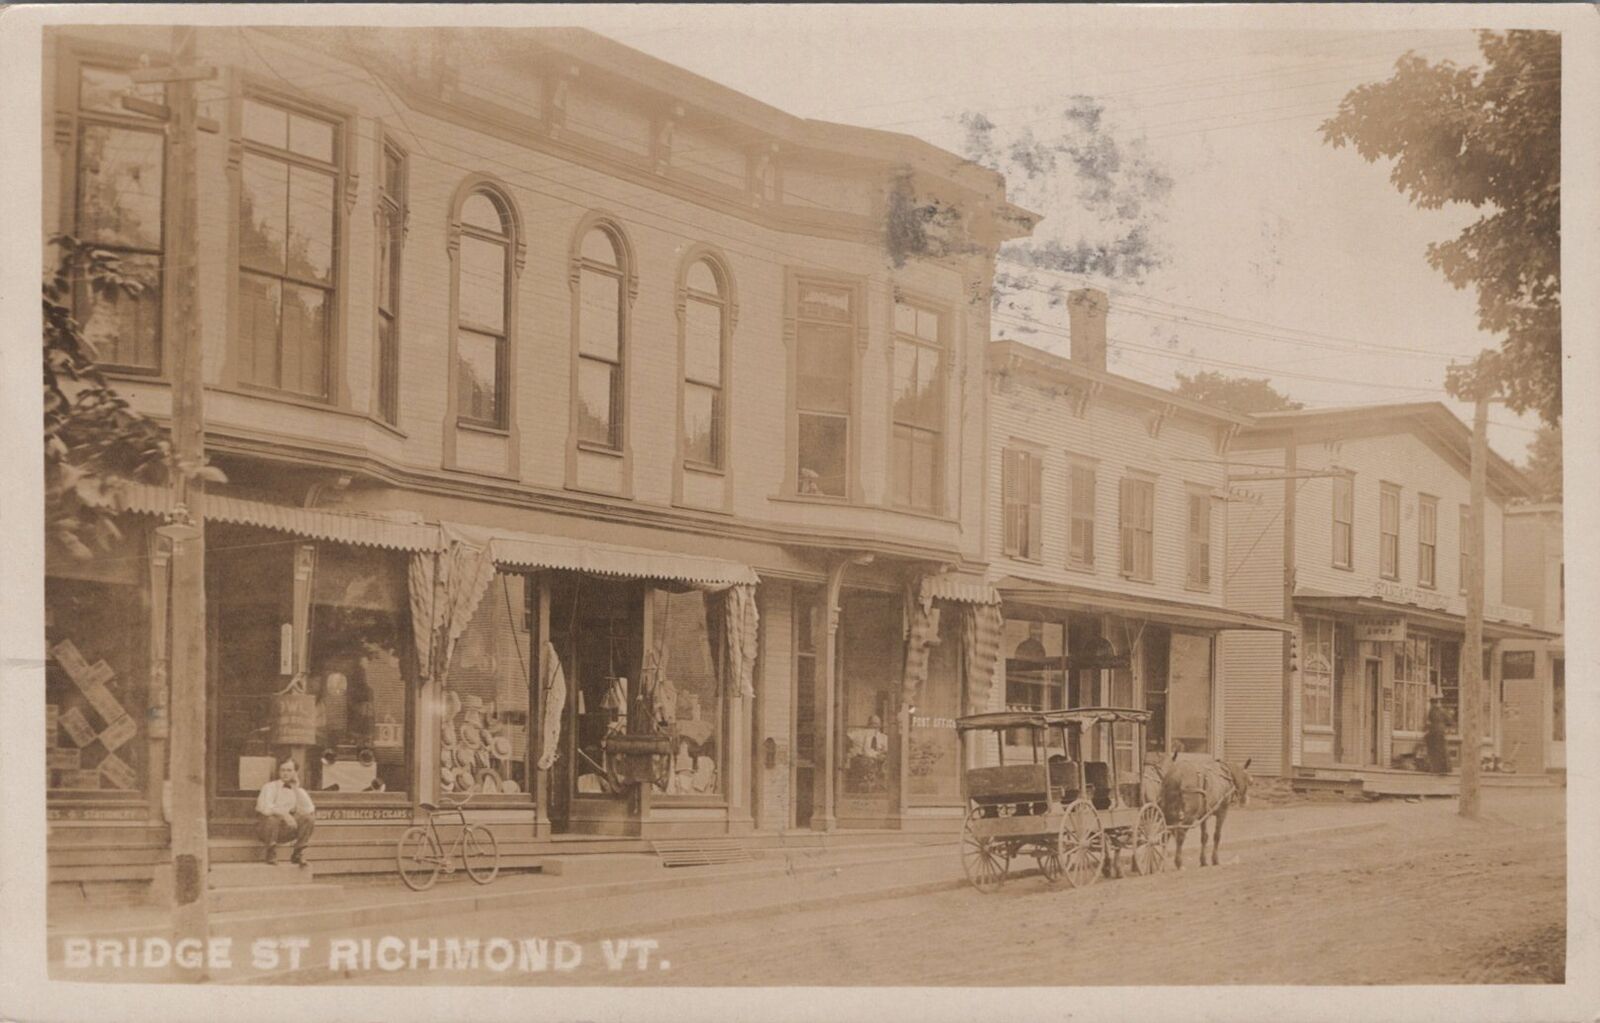 Stores, Post Office, Bicycle Bridge Street Richmond Vermont 1907 RPPC Postcard